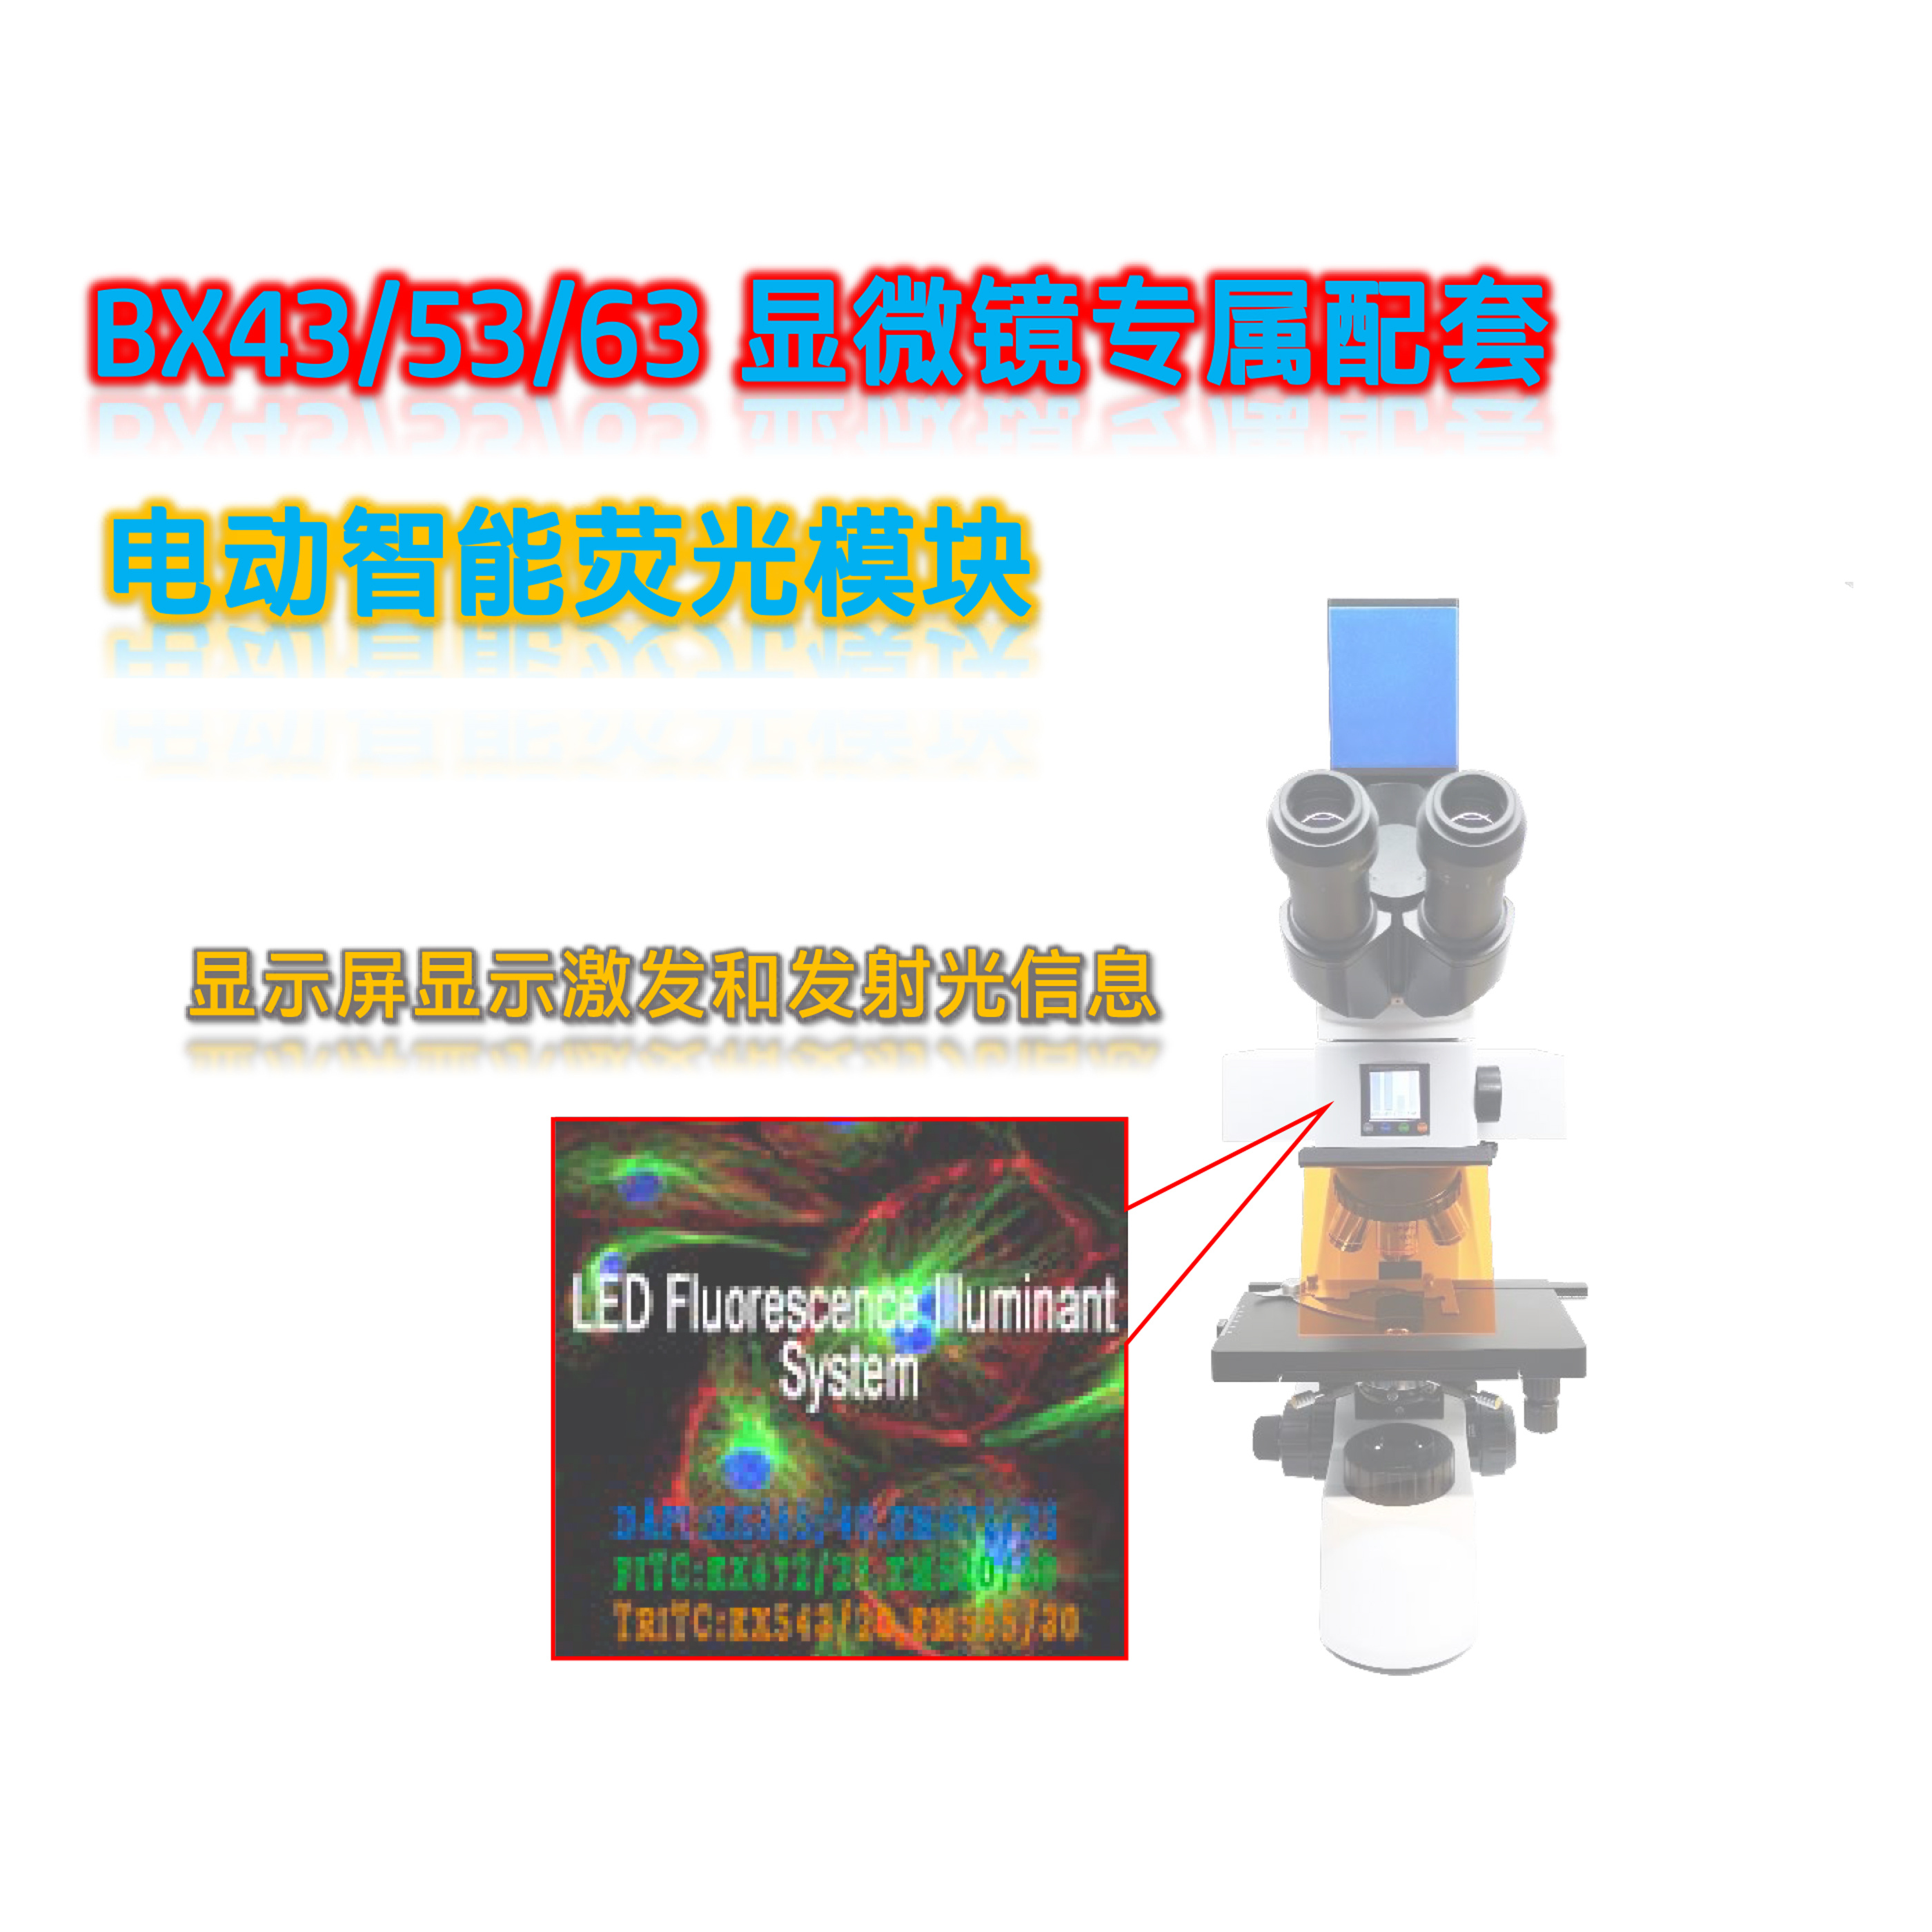 奥林巴斯显微镜BX43/53配套荧光配件正置荧光模块BX-UVB-E